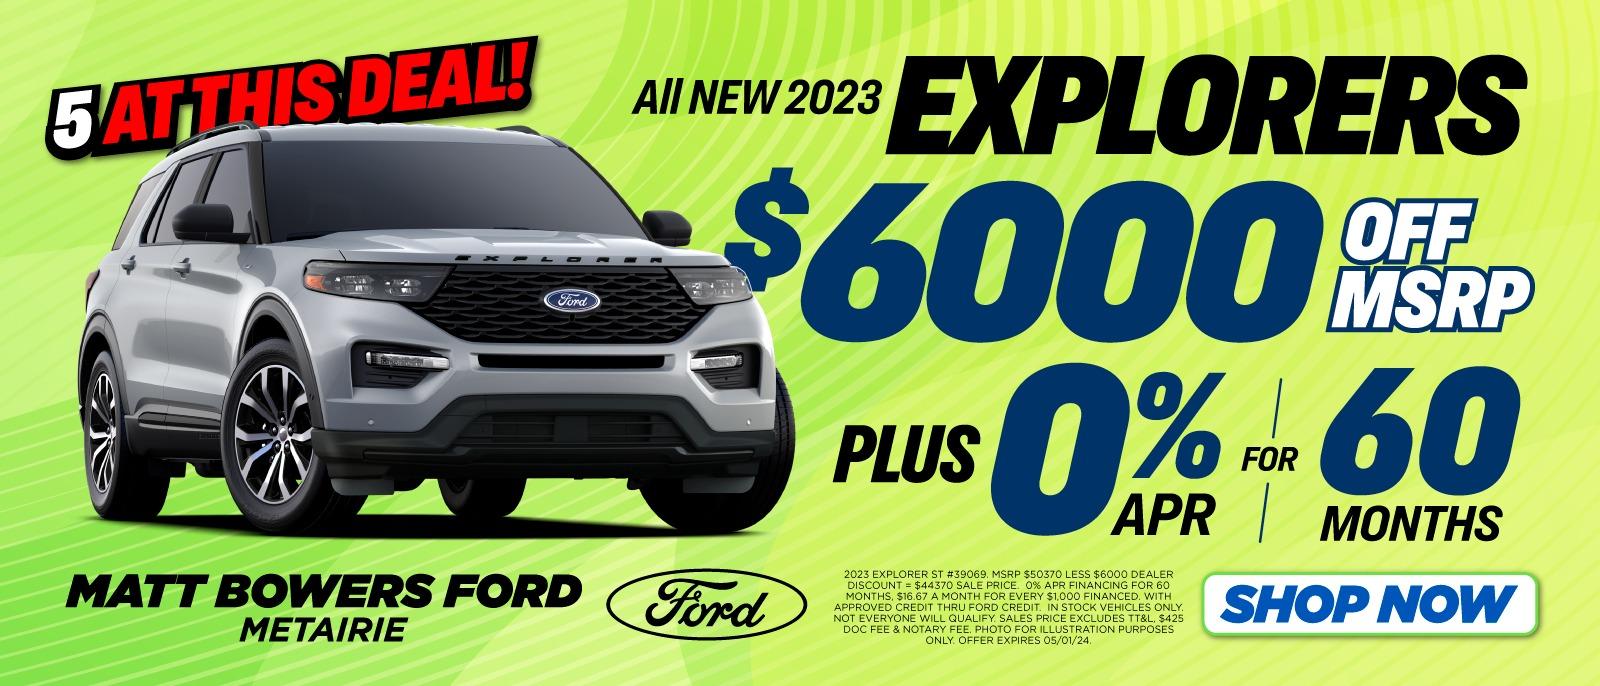 2023 Ford Explorer Deal